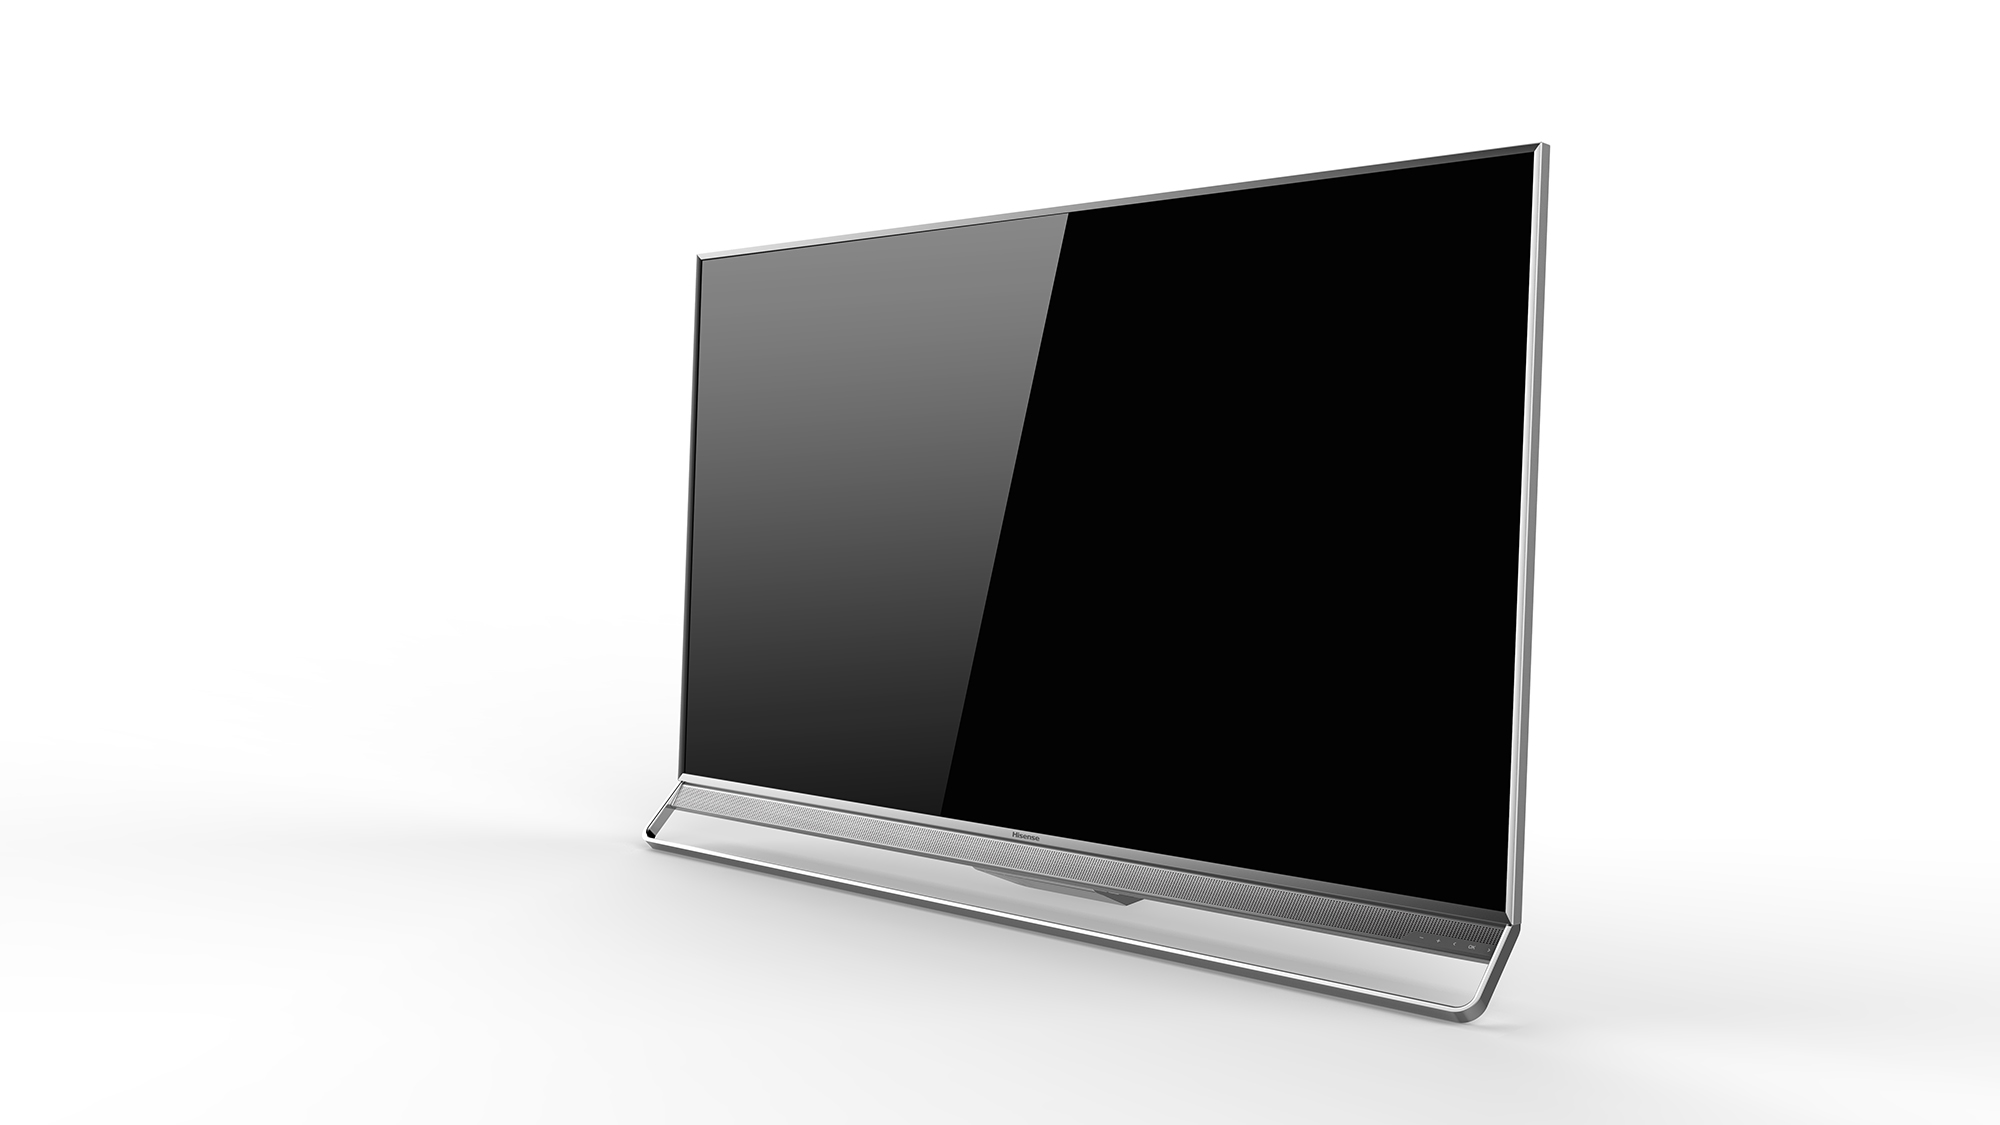 Hisense 2017 TV Product Hisense Takes On Big Brand TV Makers With New Half Price 4K UHD TVs